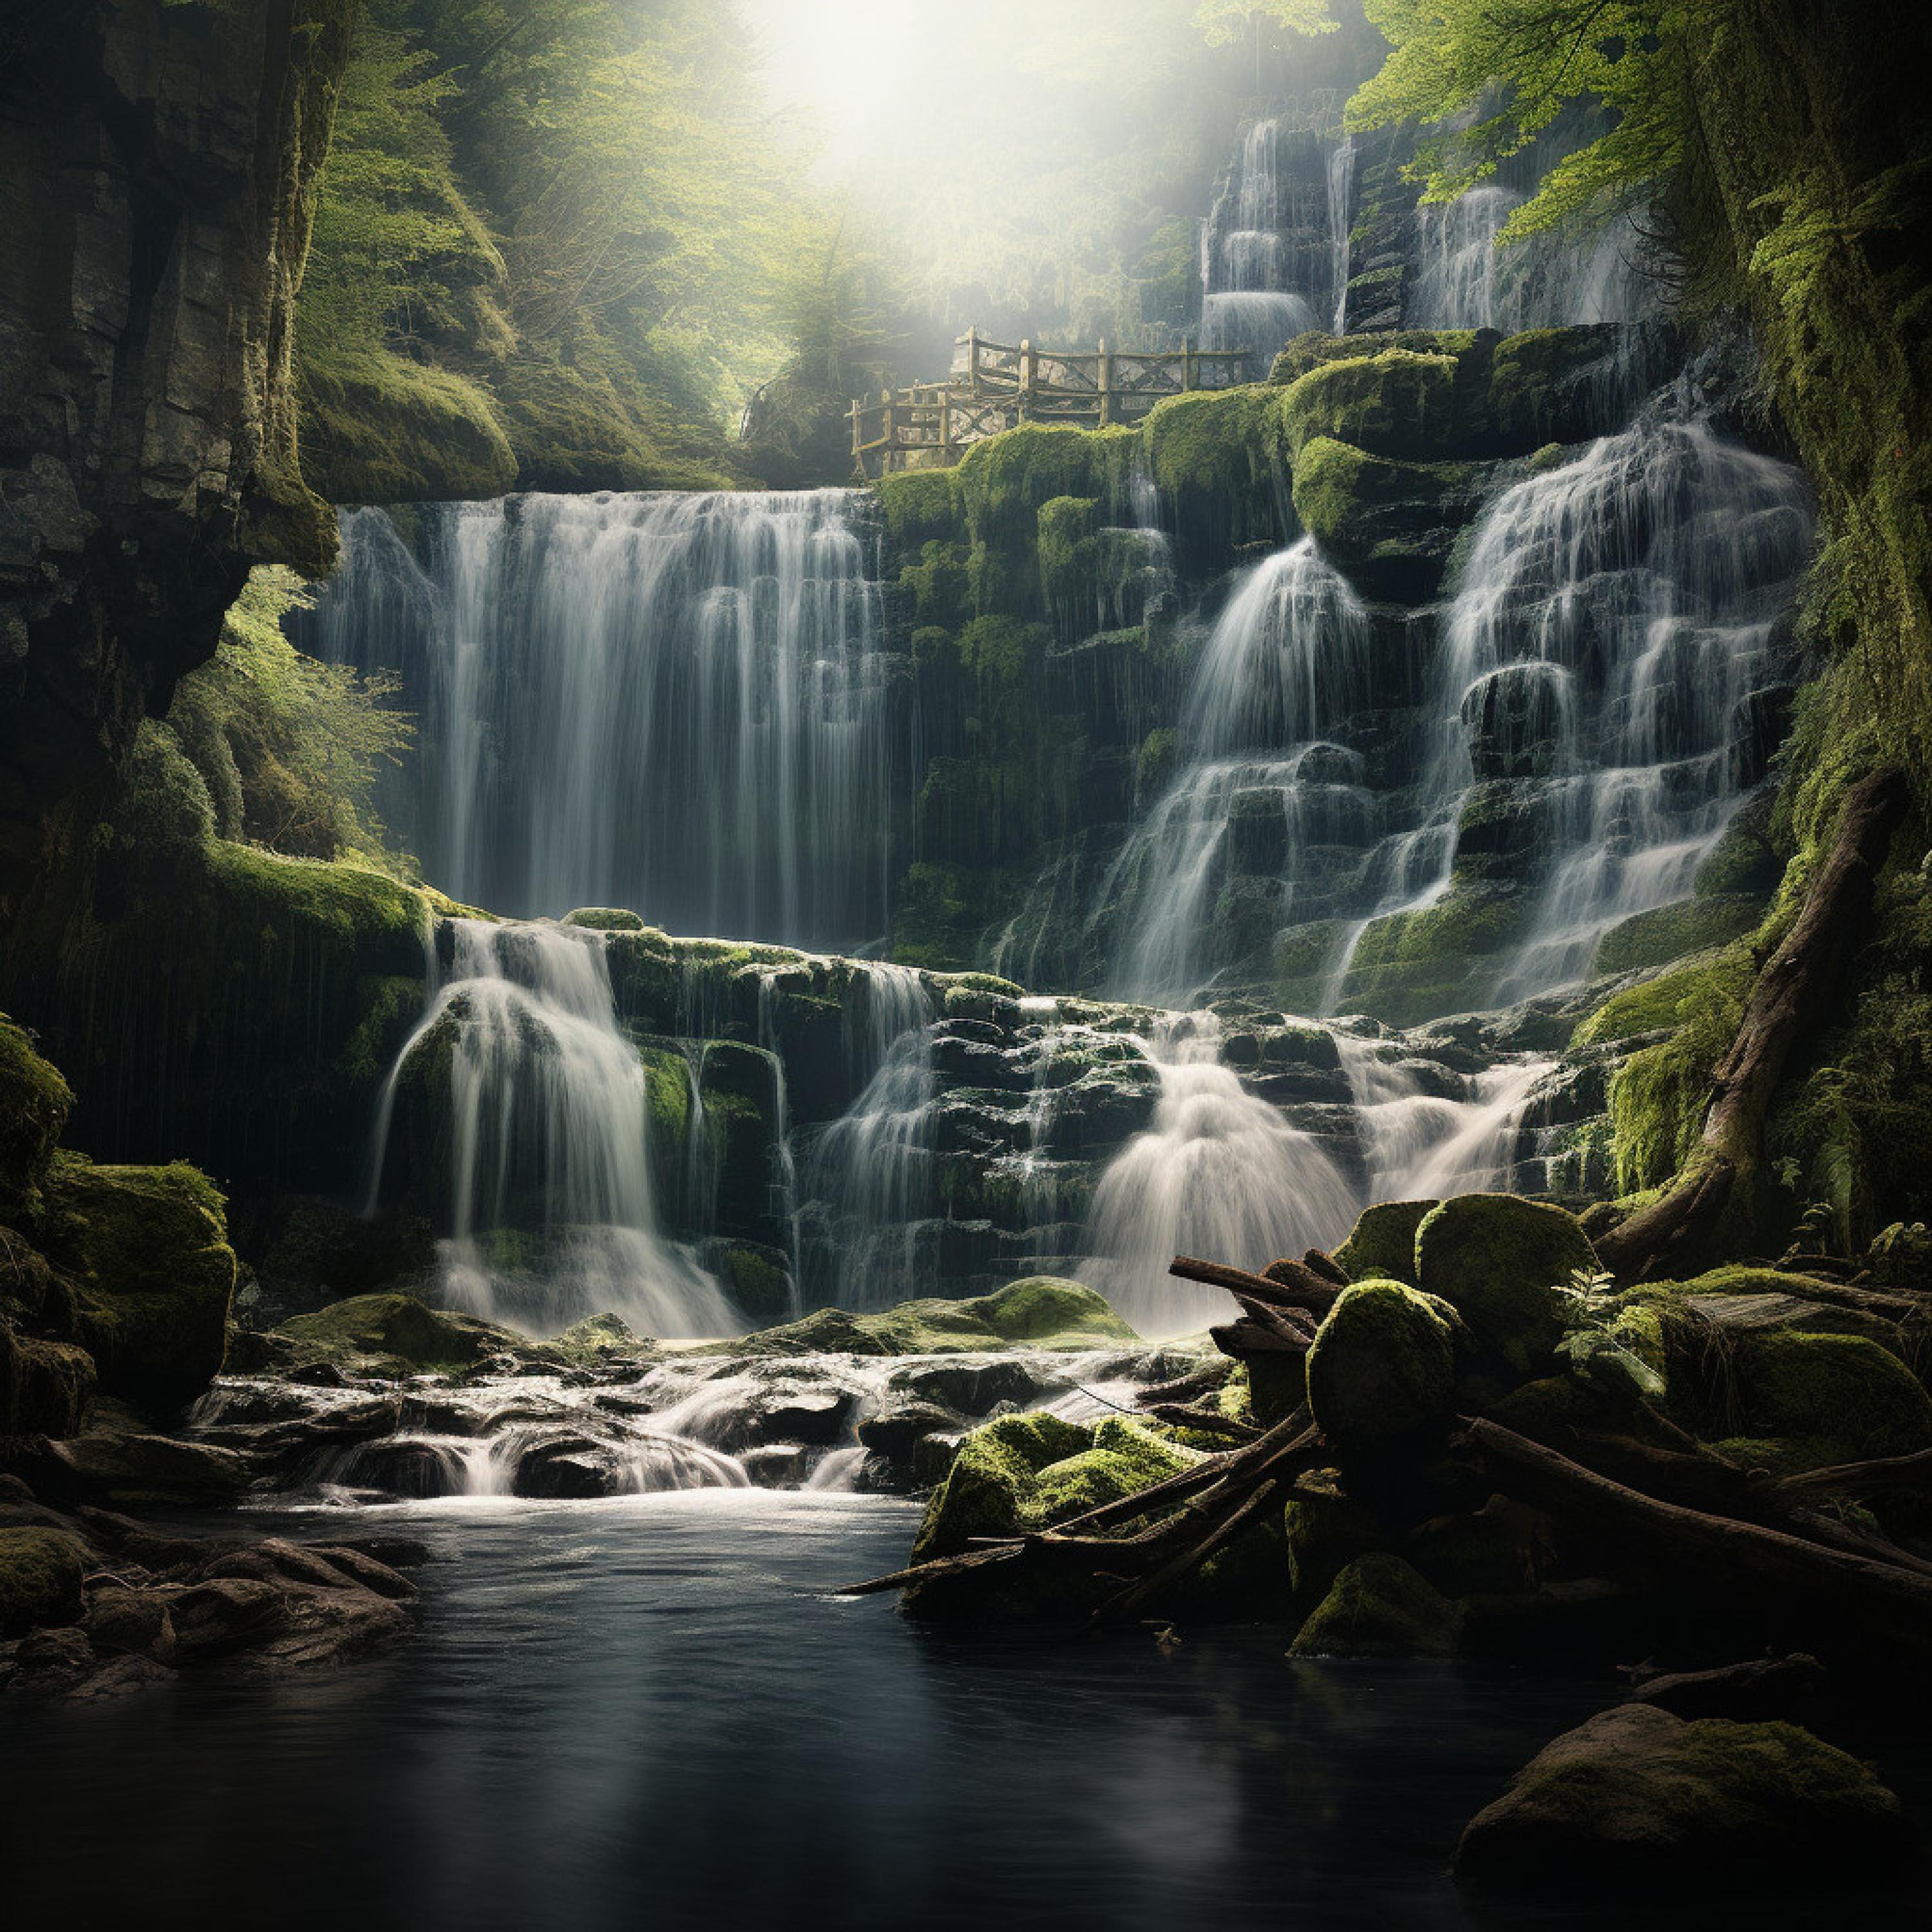 Zen Minds - Relaxing Waterfall Soundscape for Calm